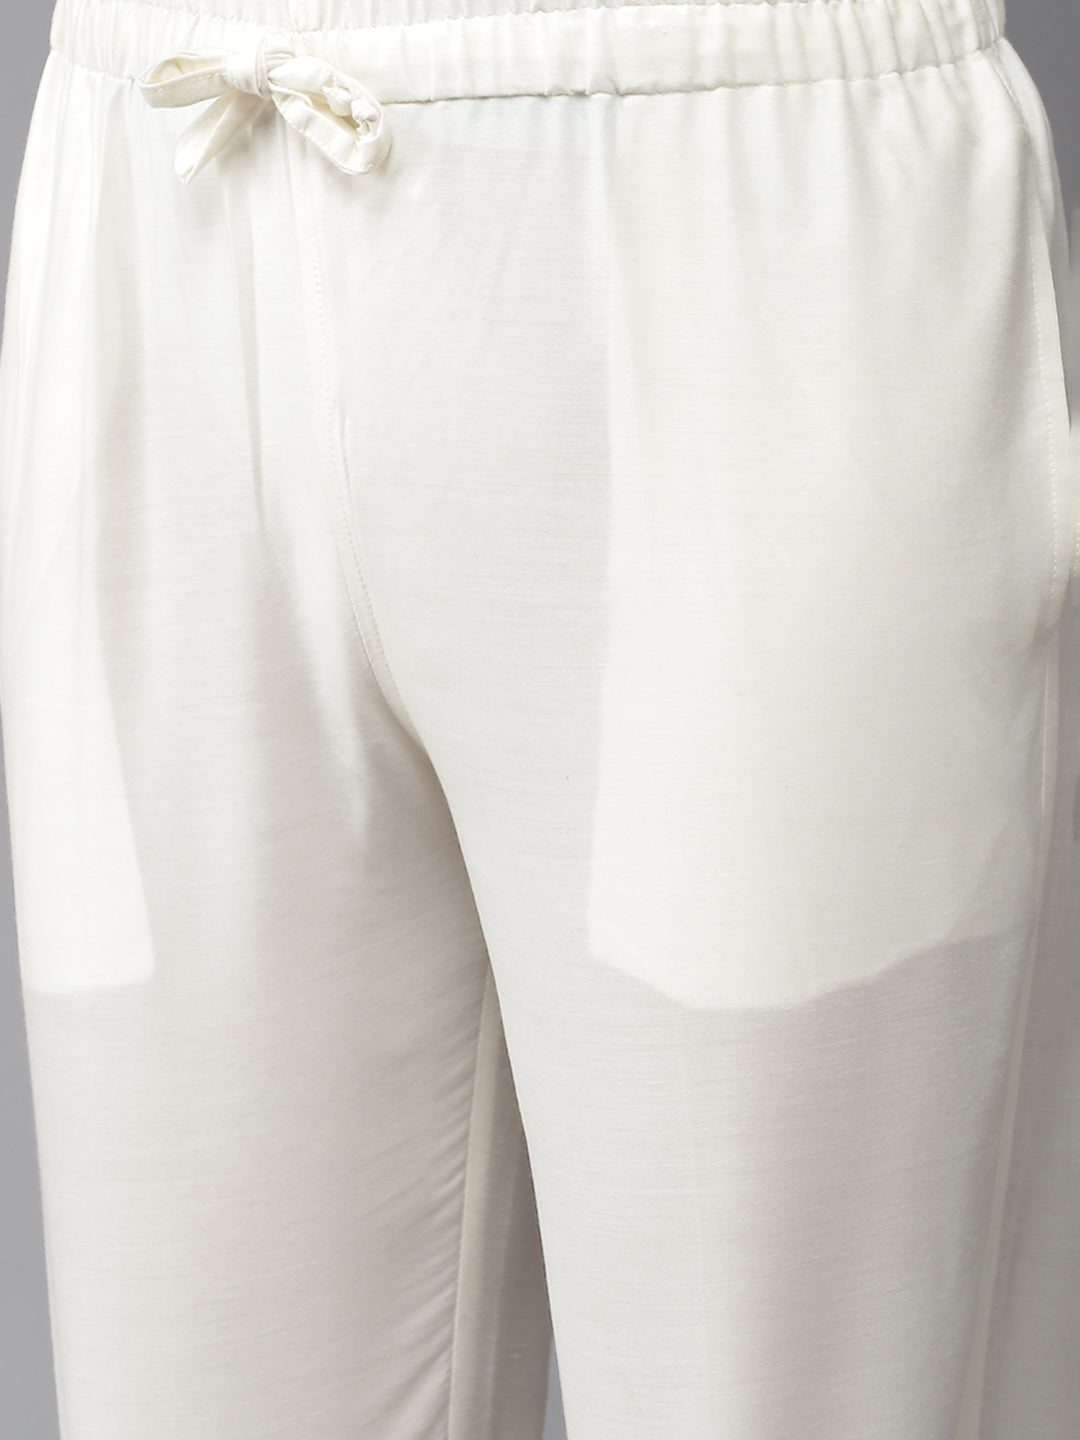 Linen Cargo Shorts for Men LUGANO. Drawstring Shorts, Elastic Waist Pants  With Pockets. White Shorts. Linen Clothing for Men. -  Hong Kong